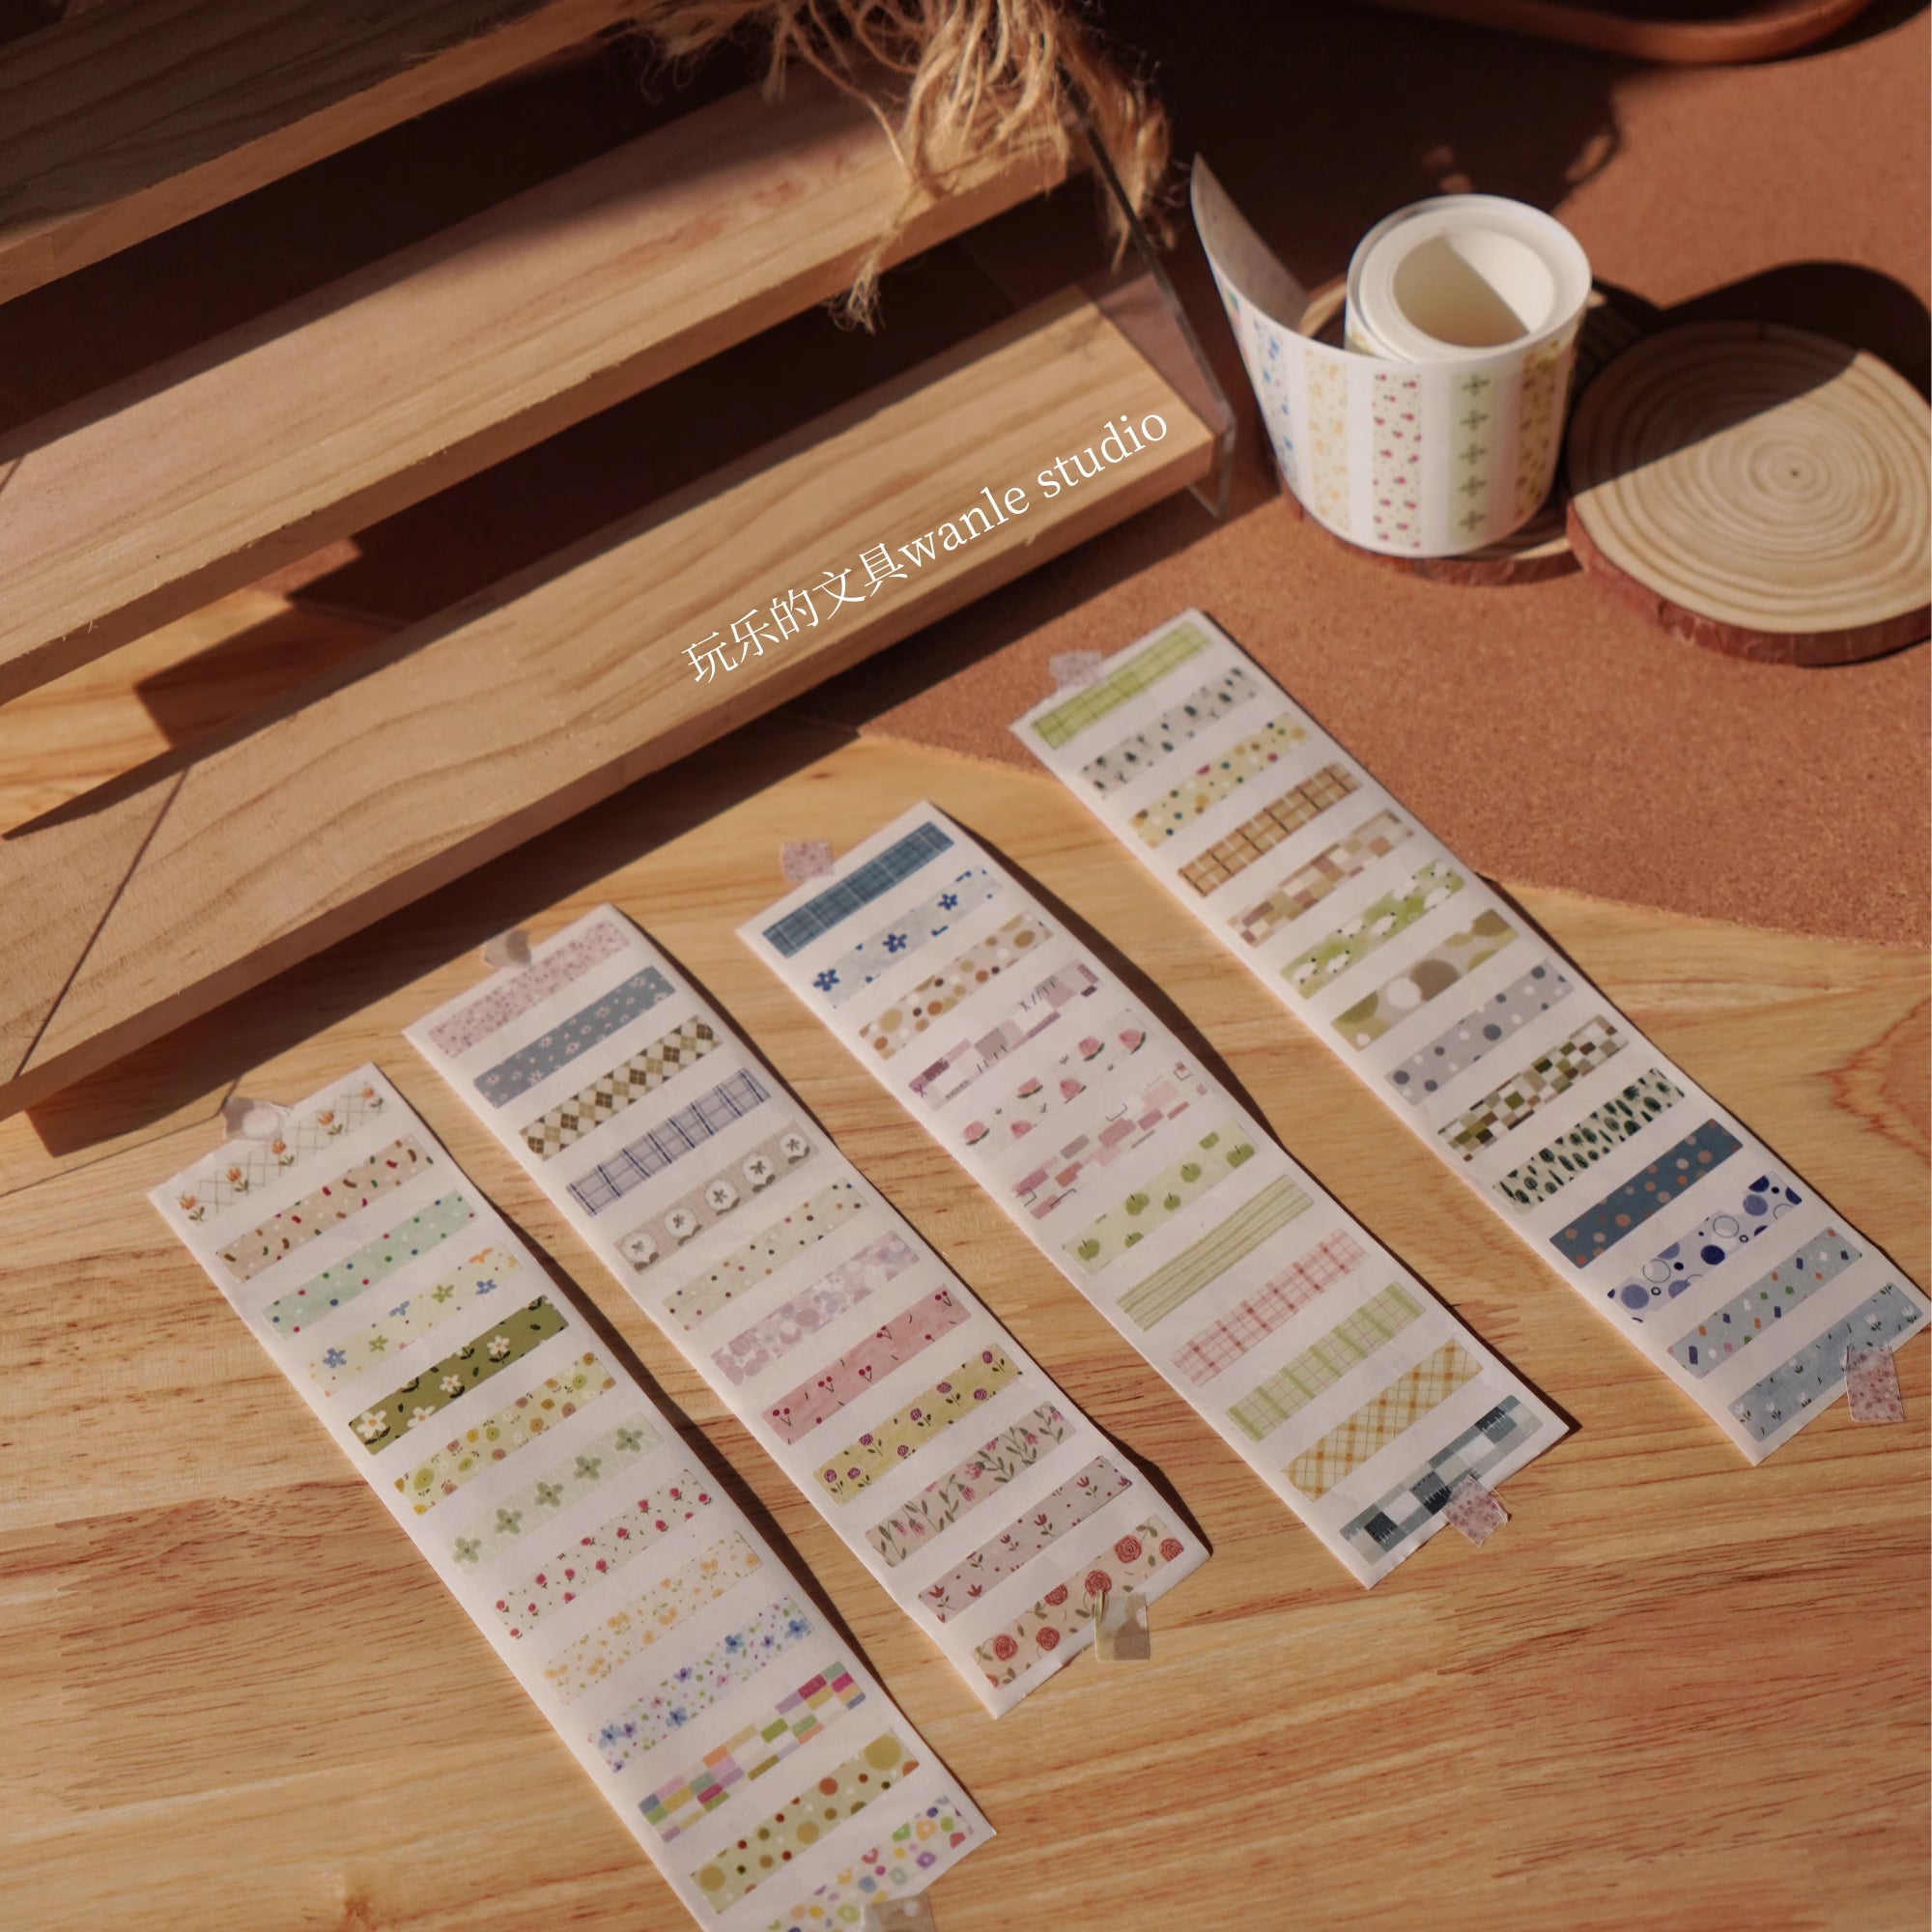 Wanle Studio Masking Tape: Colorful Strips